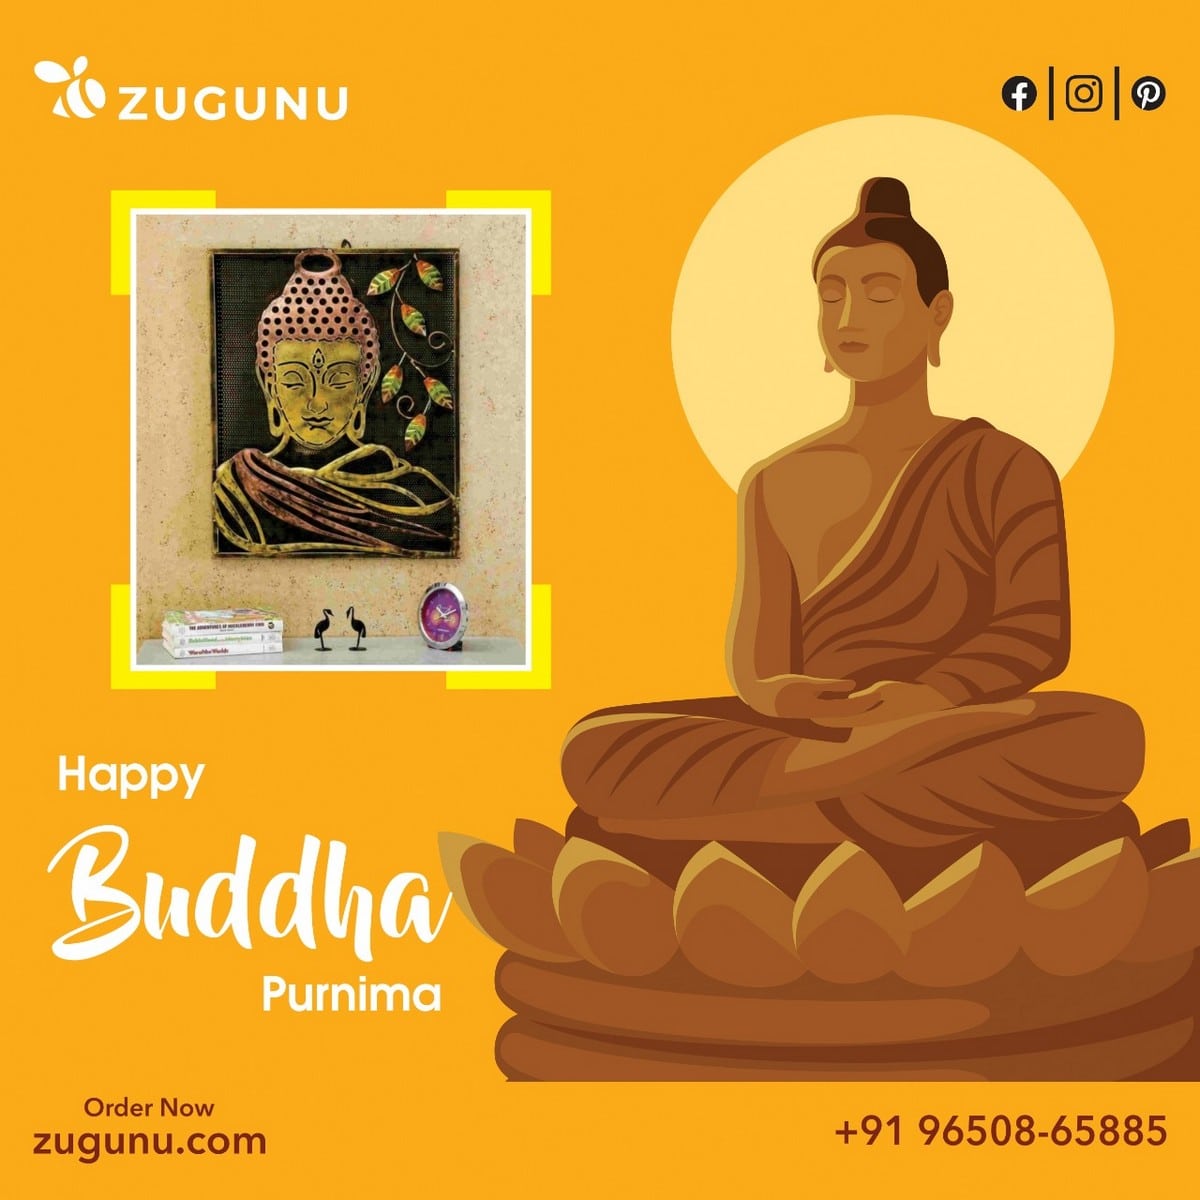 Wish You All A Happy Buddha Purnima 2